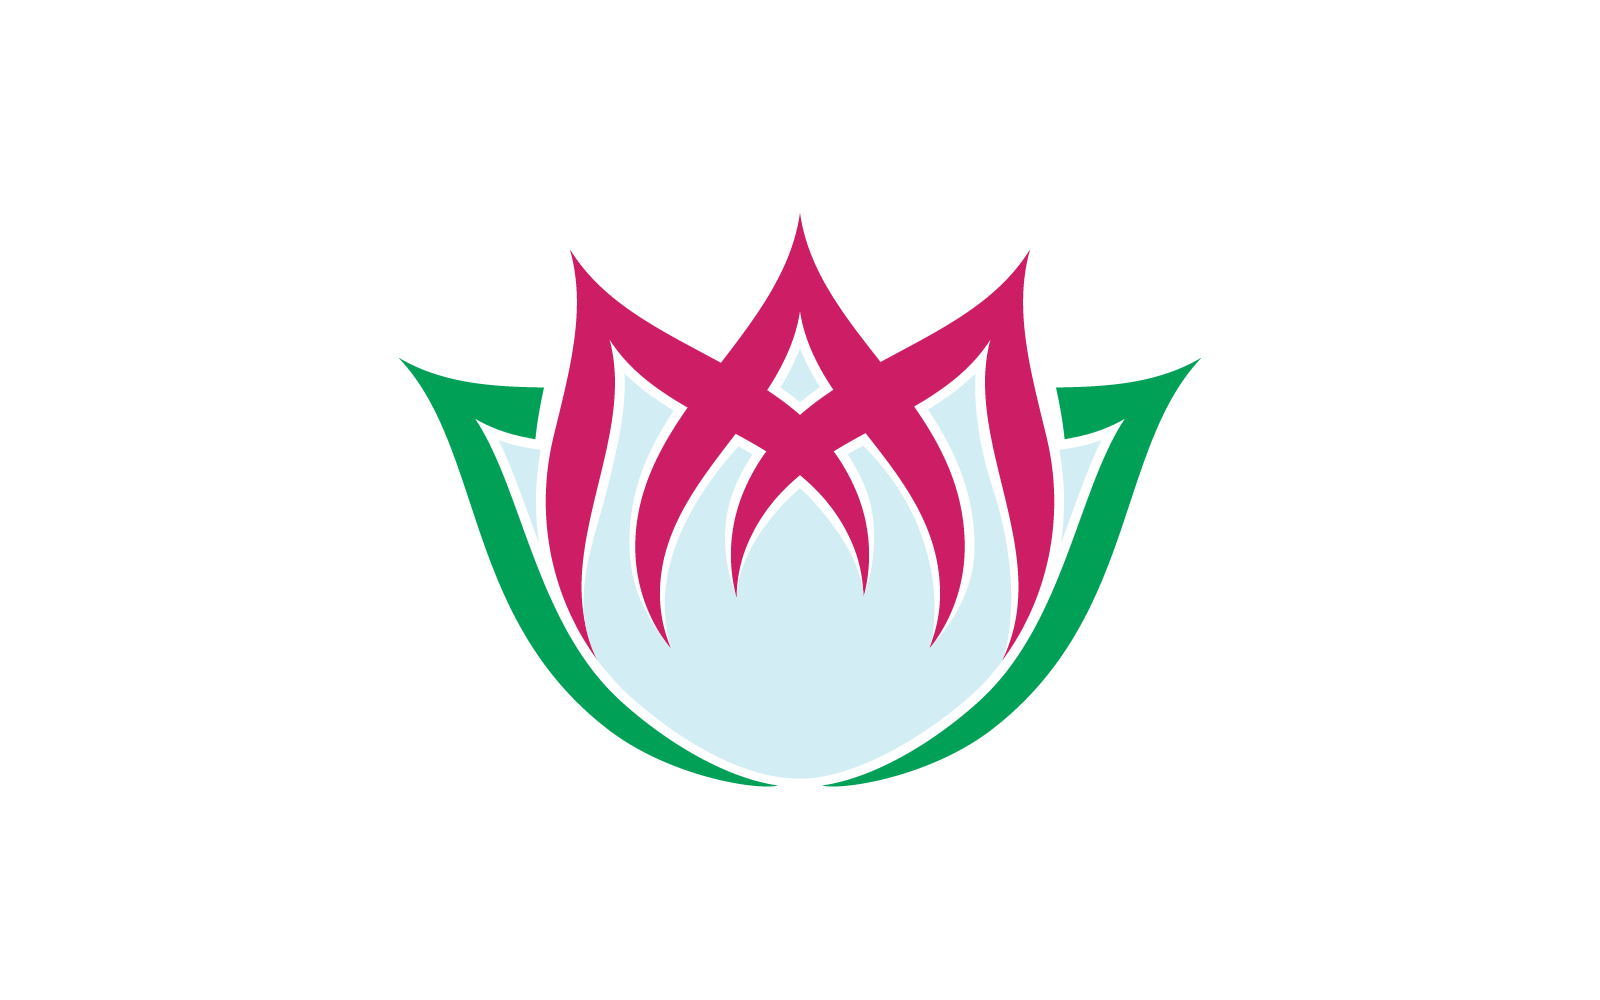 Beauty Lotus flowers illustration logo icon vector design